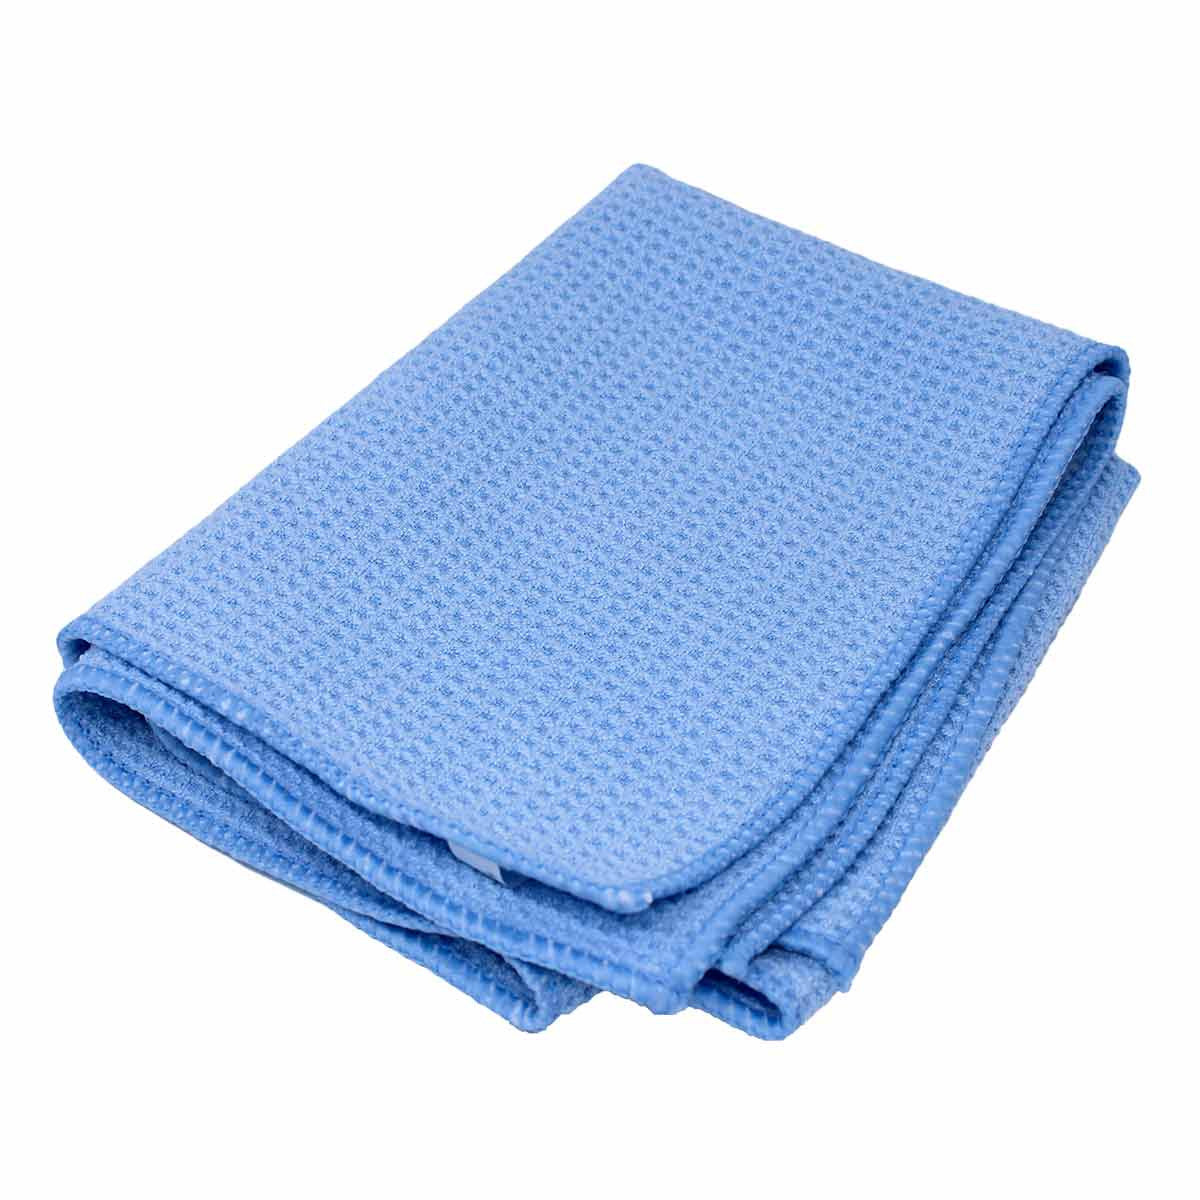 15 x 25 Inch Blue Microfiber Soft Waffle Textured Cloth